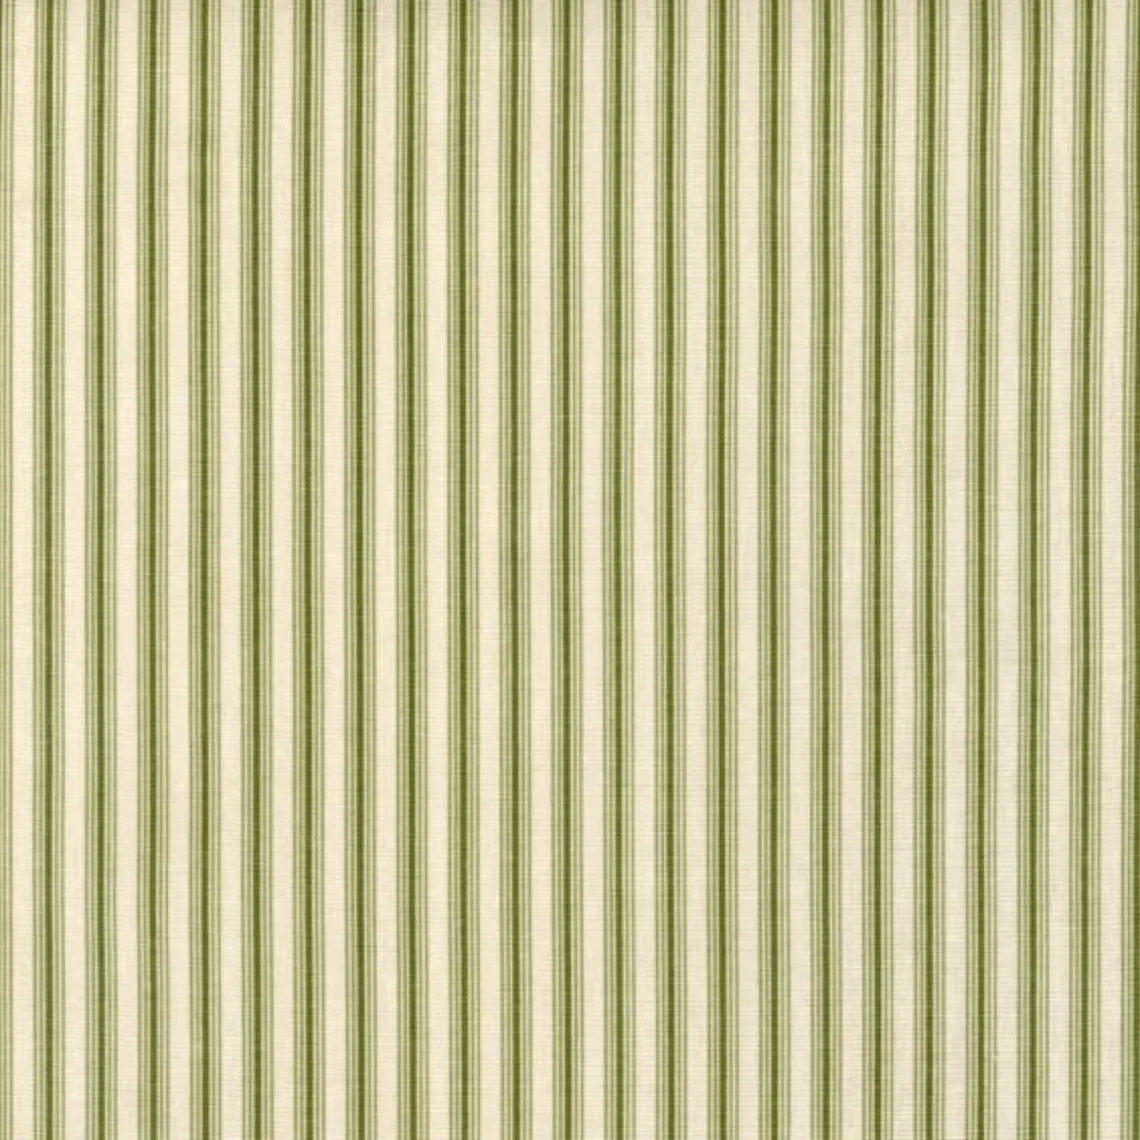 duvet cover in cottage jungle green stripe